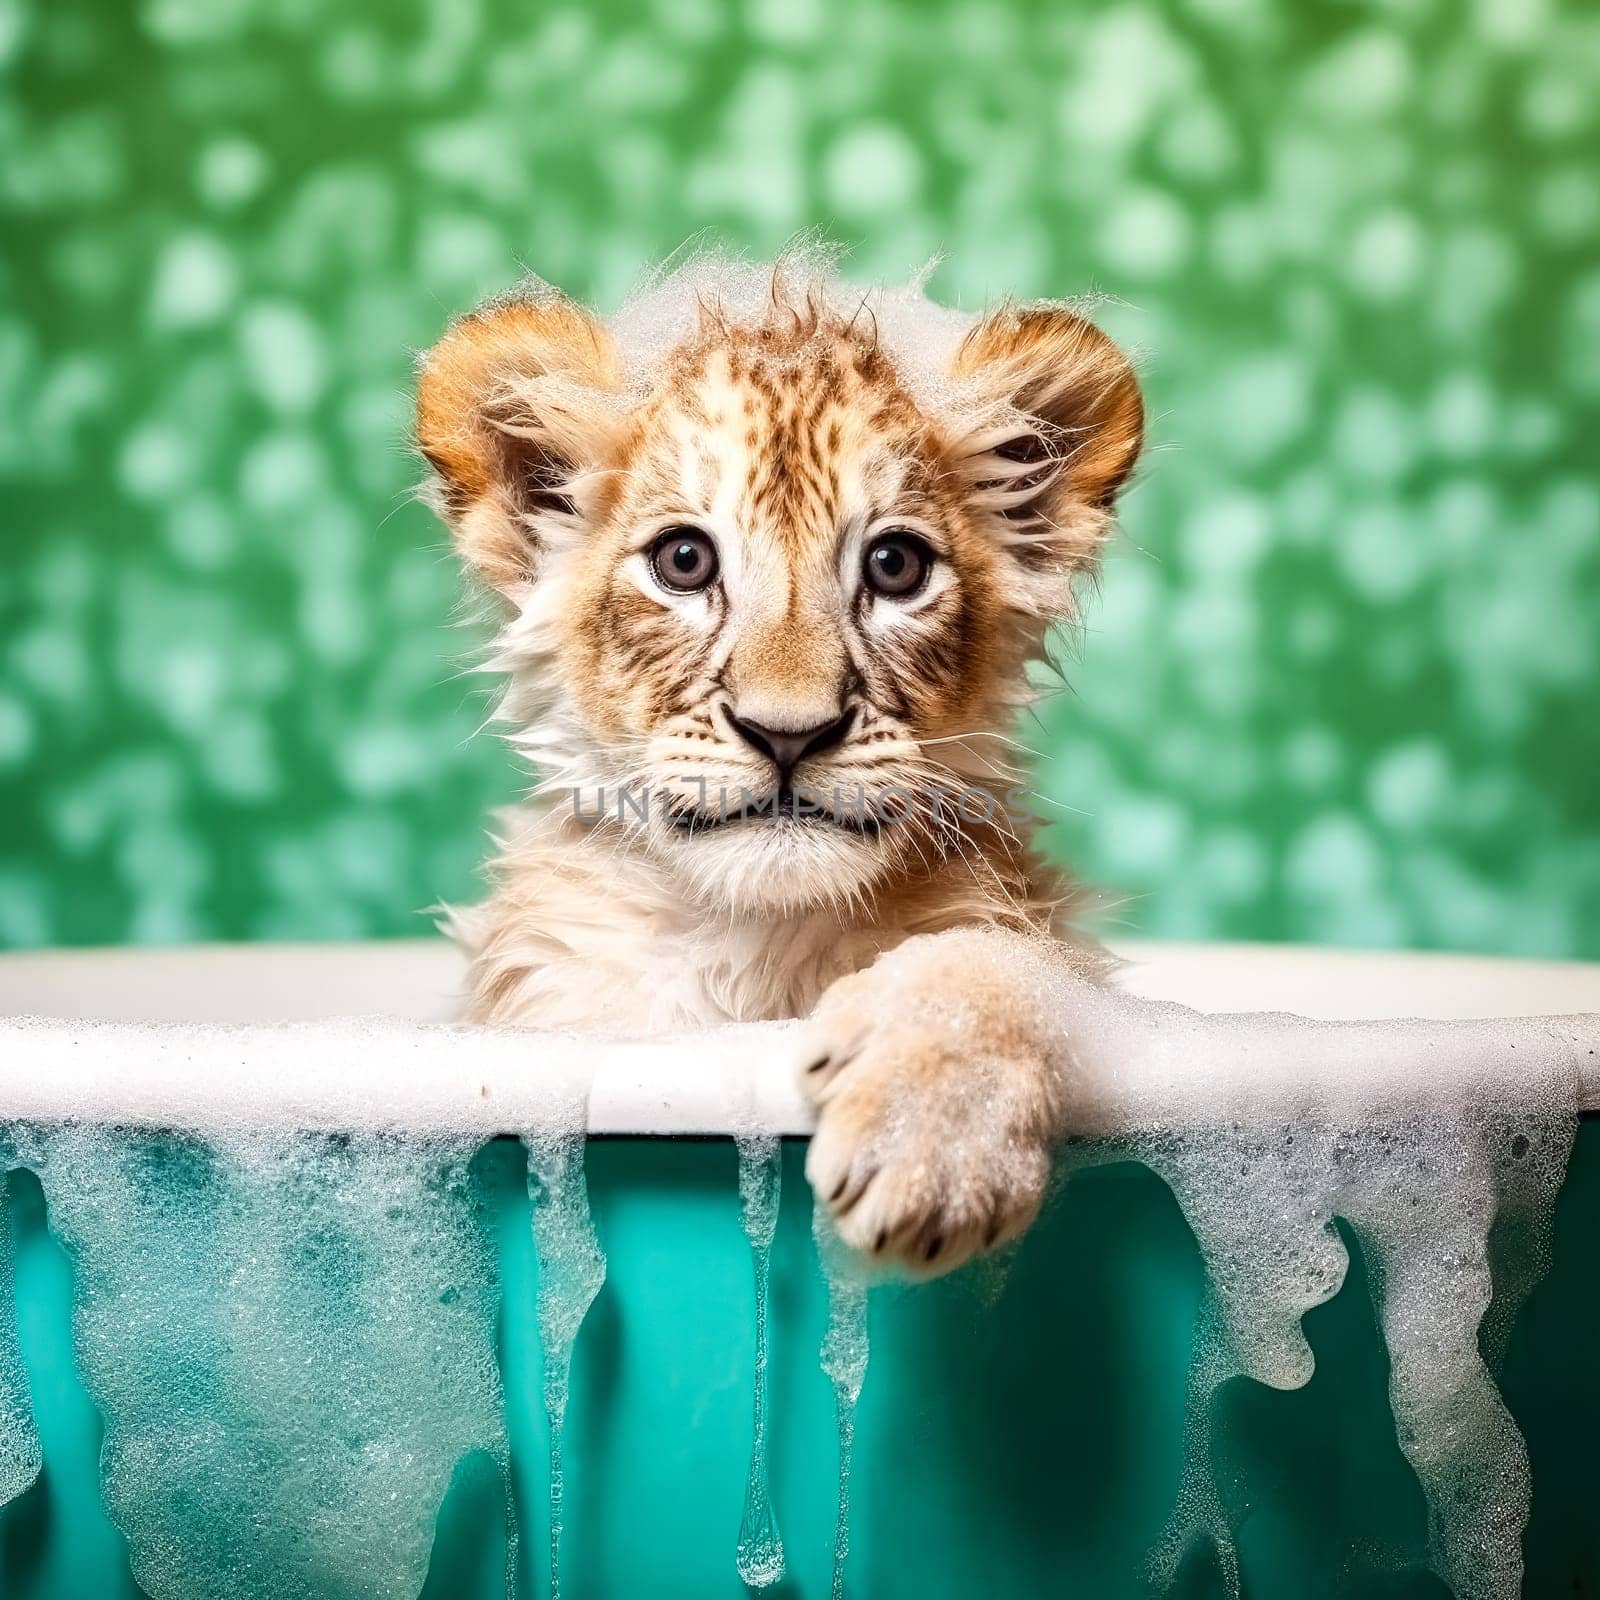 A delightful lion cub enjoys a bubbly bath by Alla_Morozova93